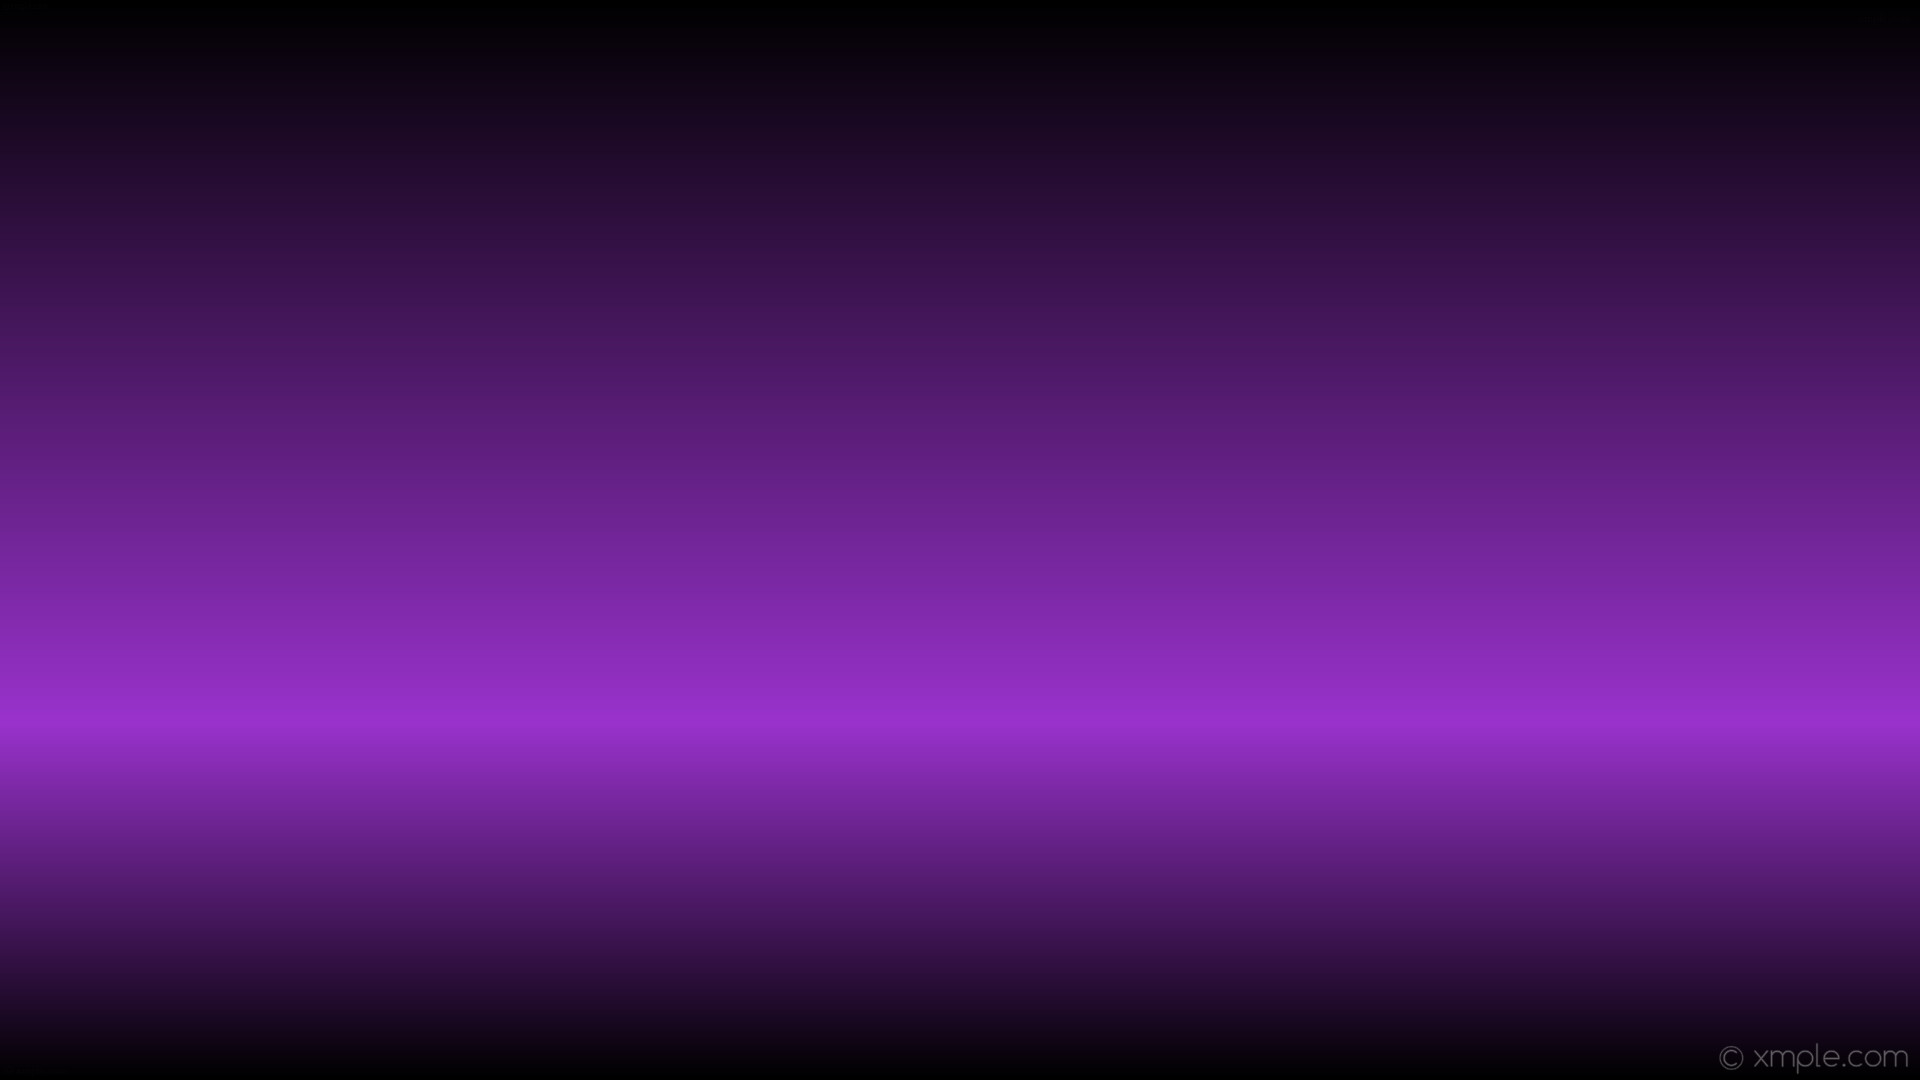 1920x1080 wallpaper highlight black purple gradient linear dark orchid #000000  #9932cc 90Â° 67%